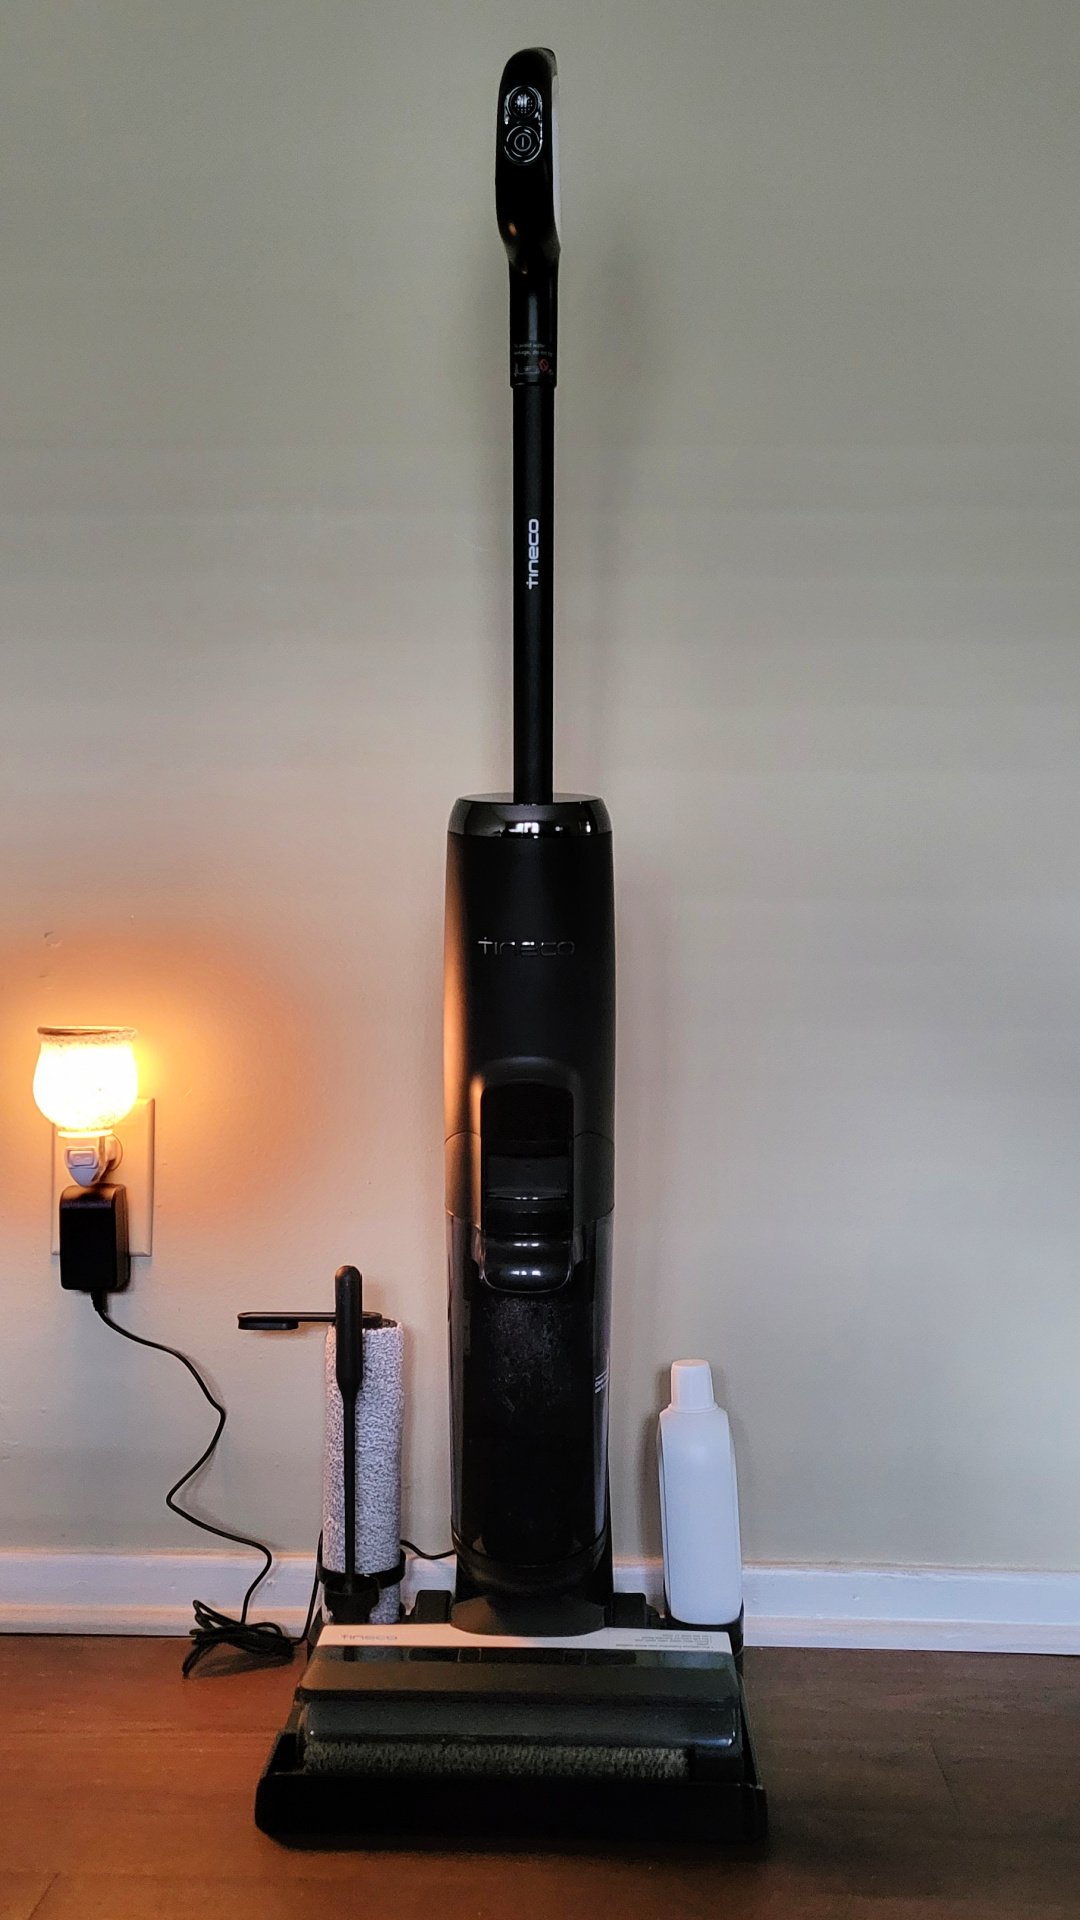 Tineco Floor One S5 Cordless Smart Wet/Dry Vacuum review